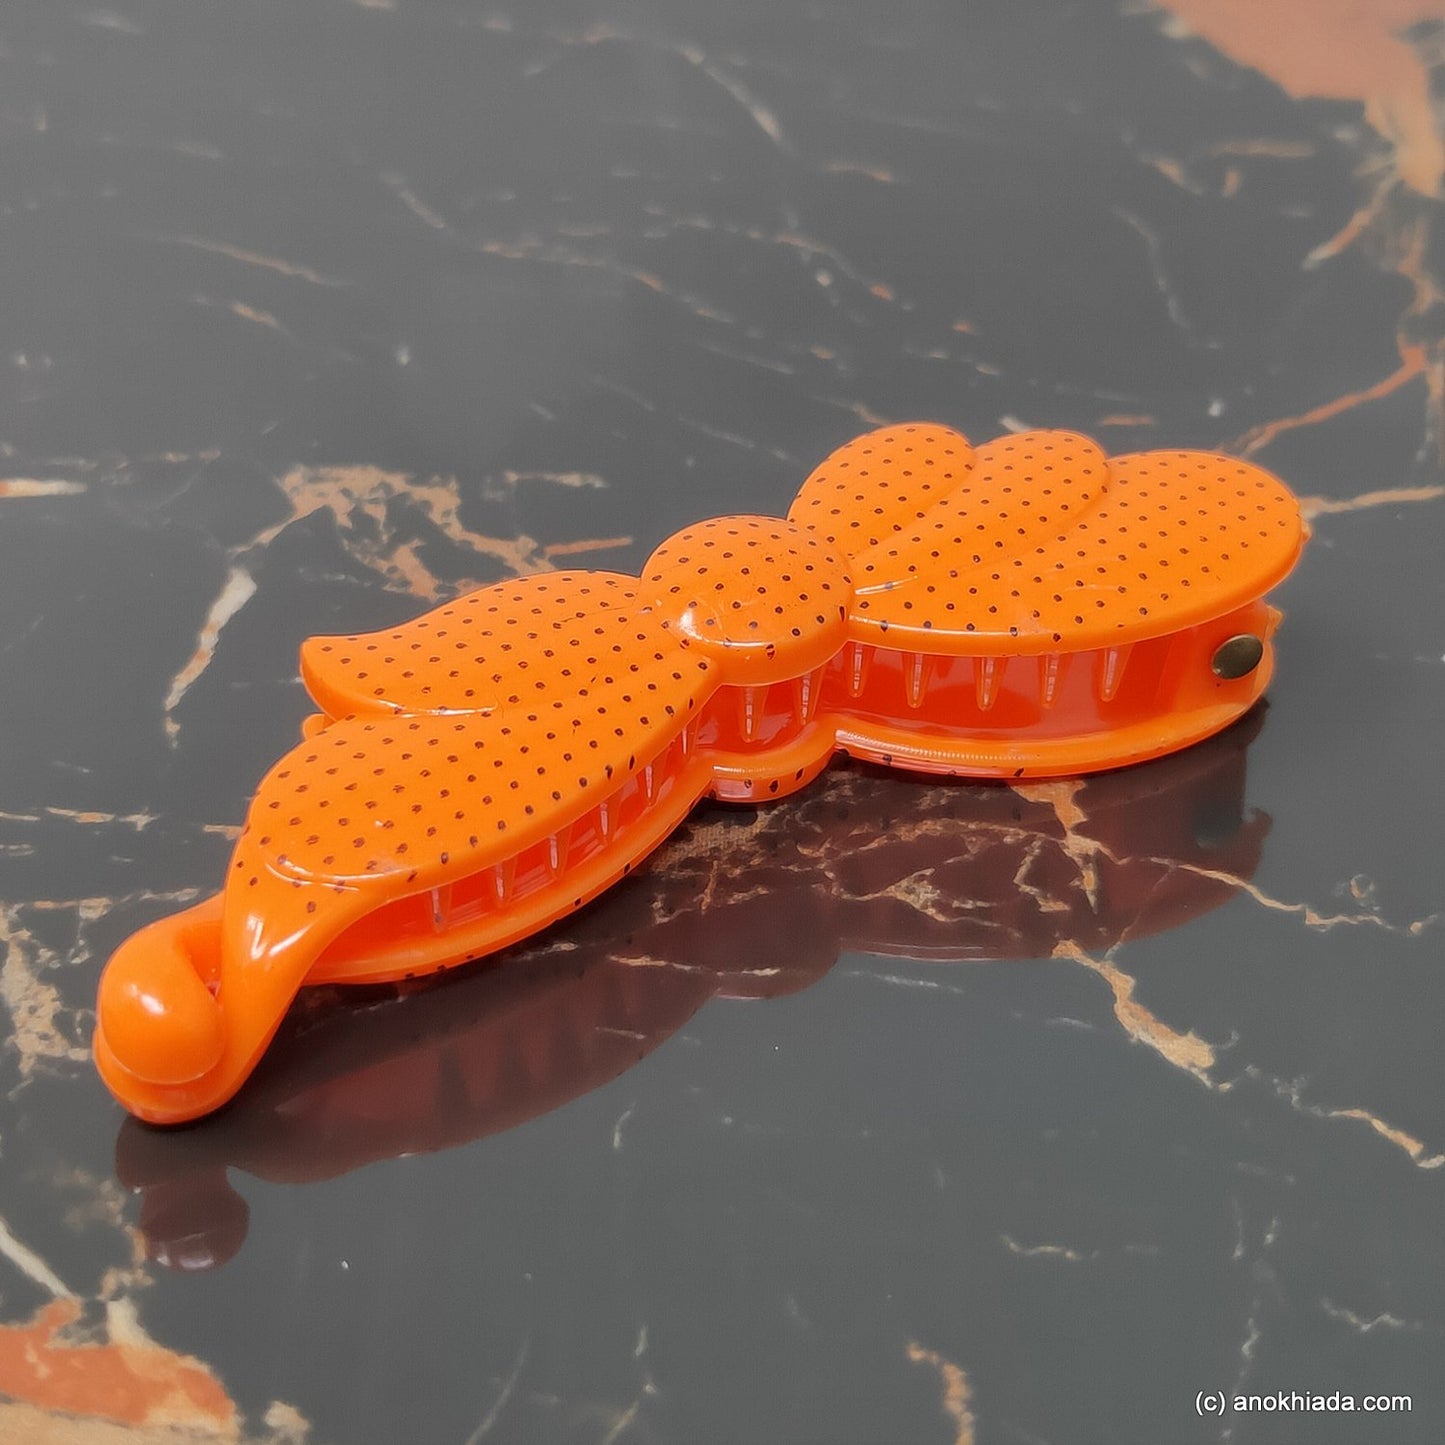 Butterfly Design Small Orange Banana Hair Clip for Girls & Woman (98-16c Banana Hair Clips)